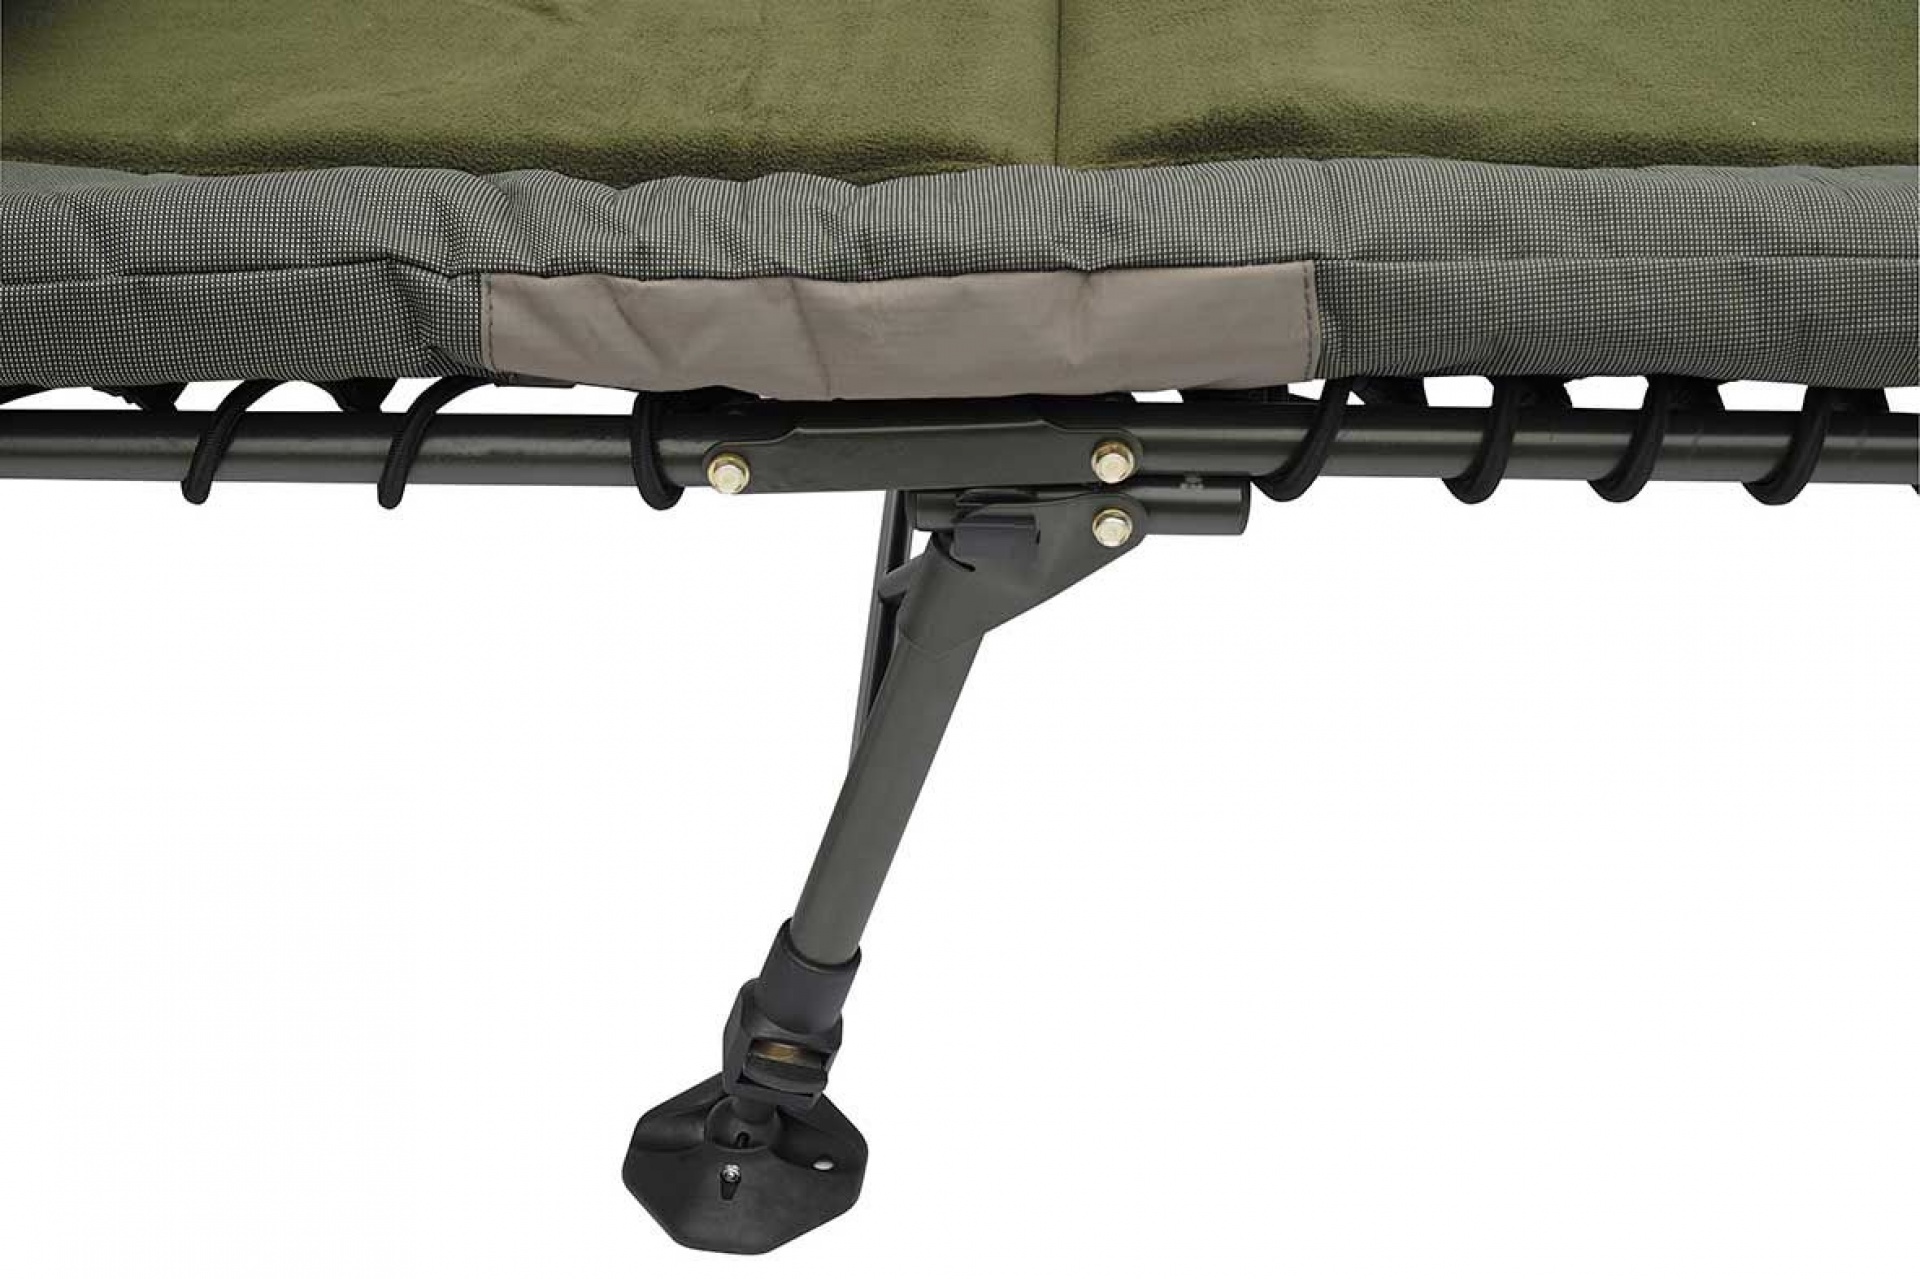 TandemBaits Enforcer S-Flat Maximum Comfort Bed 8 Legs